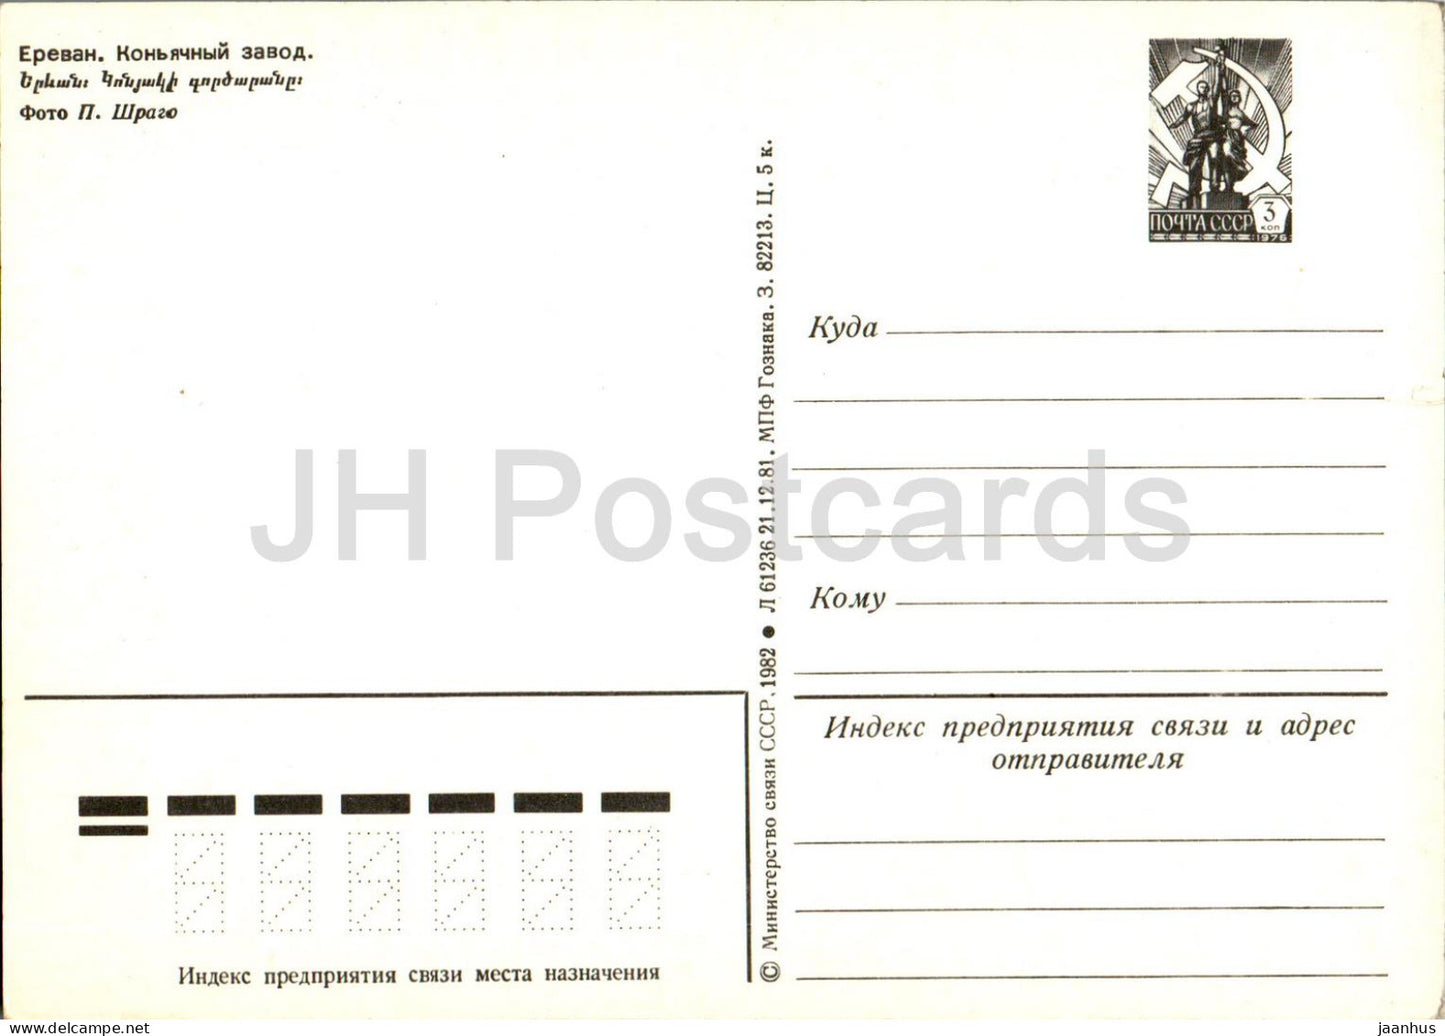 Yerevan - cognac factory - postal stationery - 1982 - Armenia USSR - unused